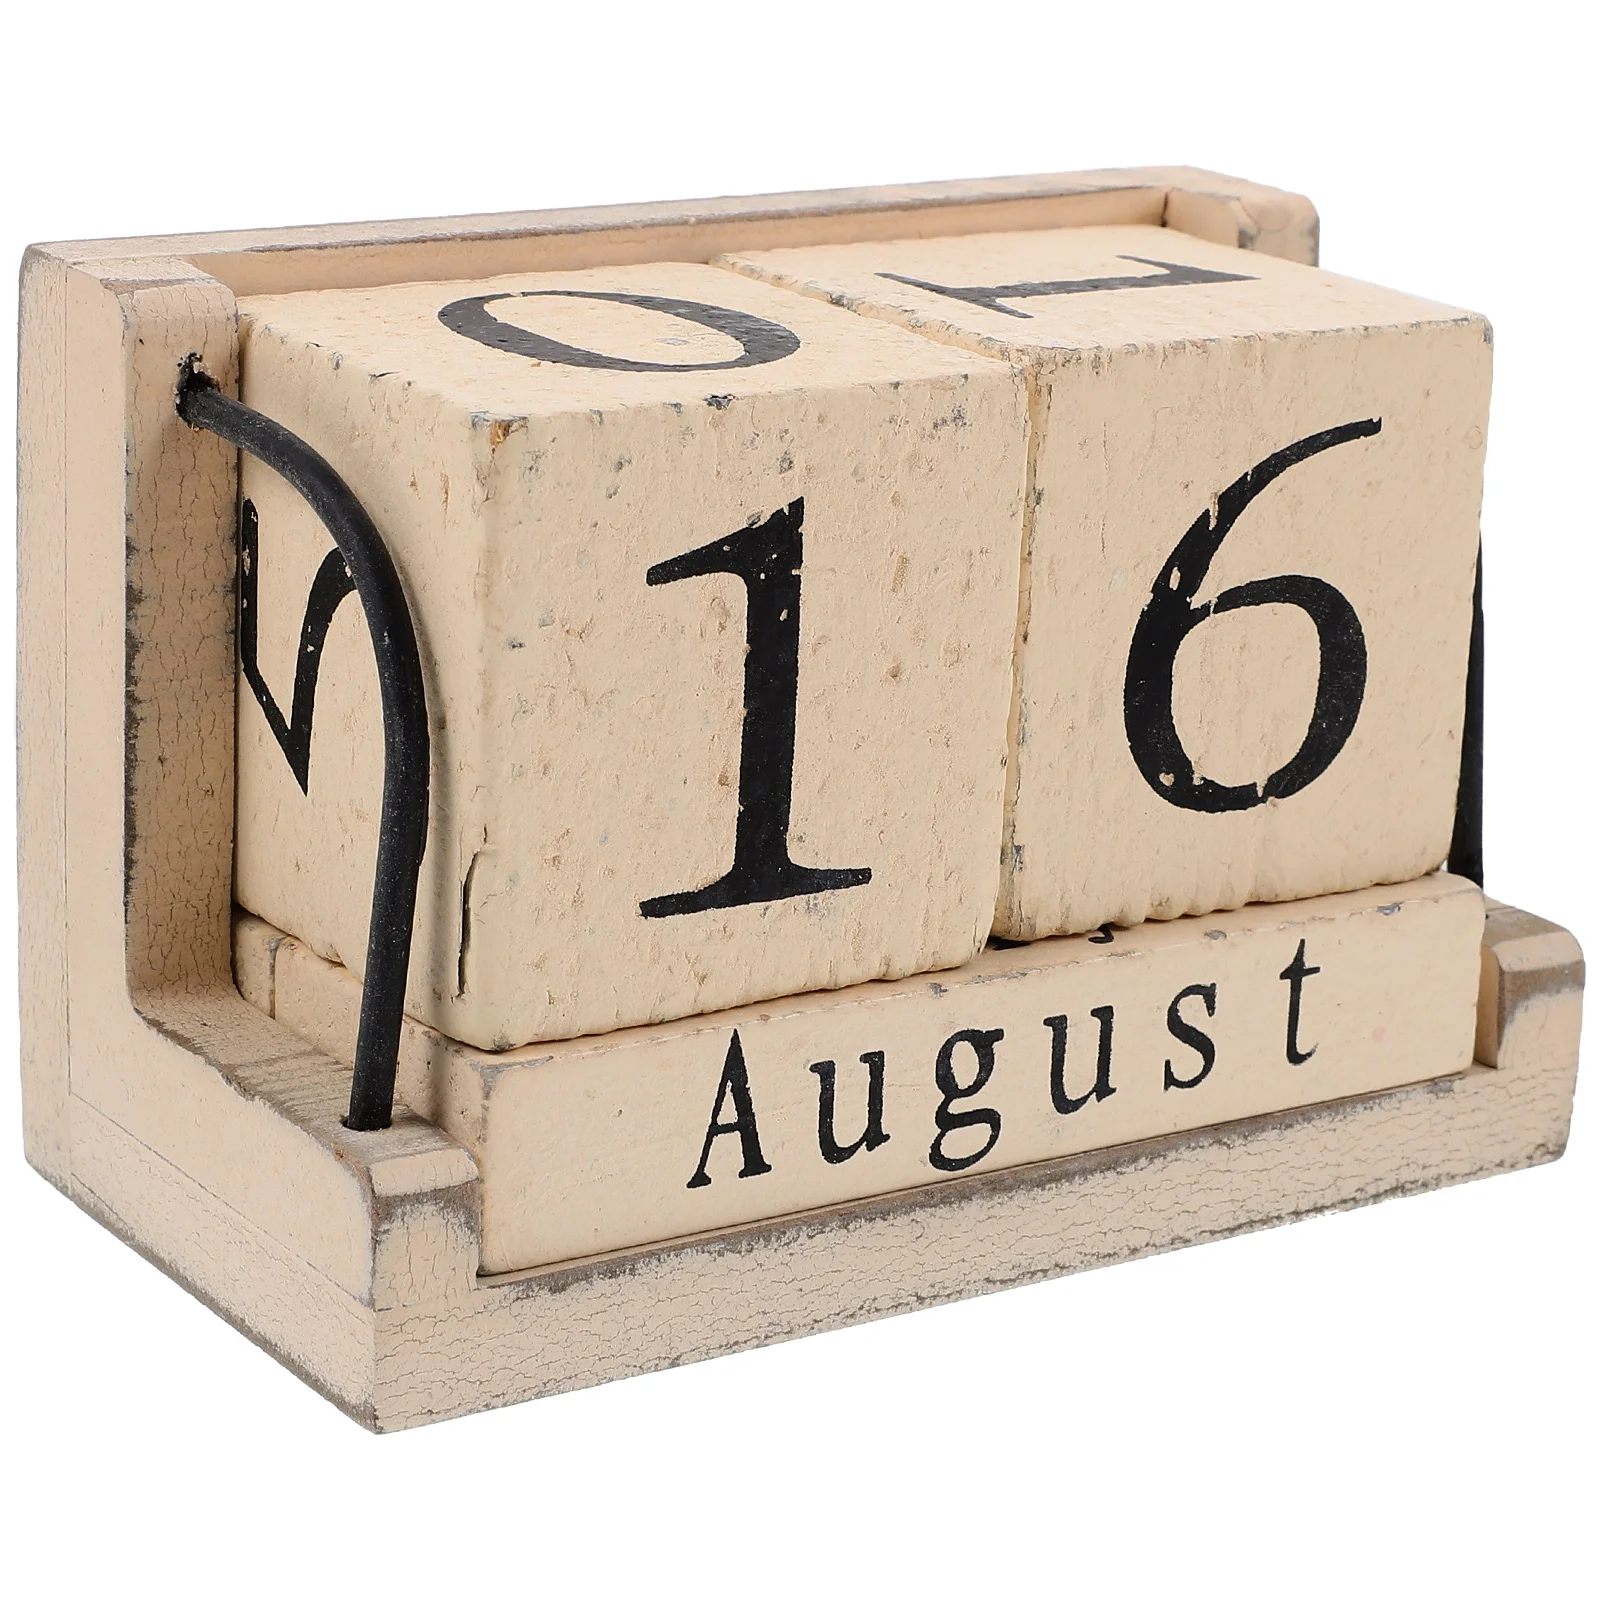 

Wooden Desk Calendar Antique Perpetual Calendar Vintage Perpetual Calendar Month Date Display Calendar Wooden Perpetual Calendar